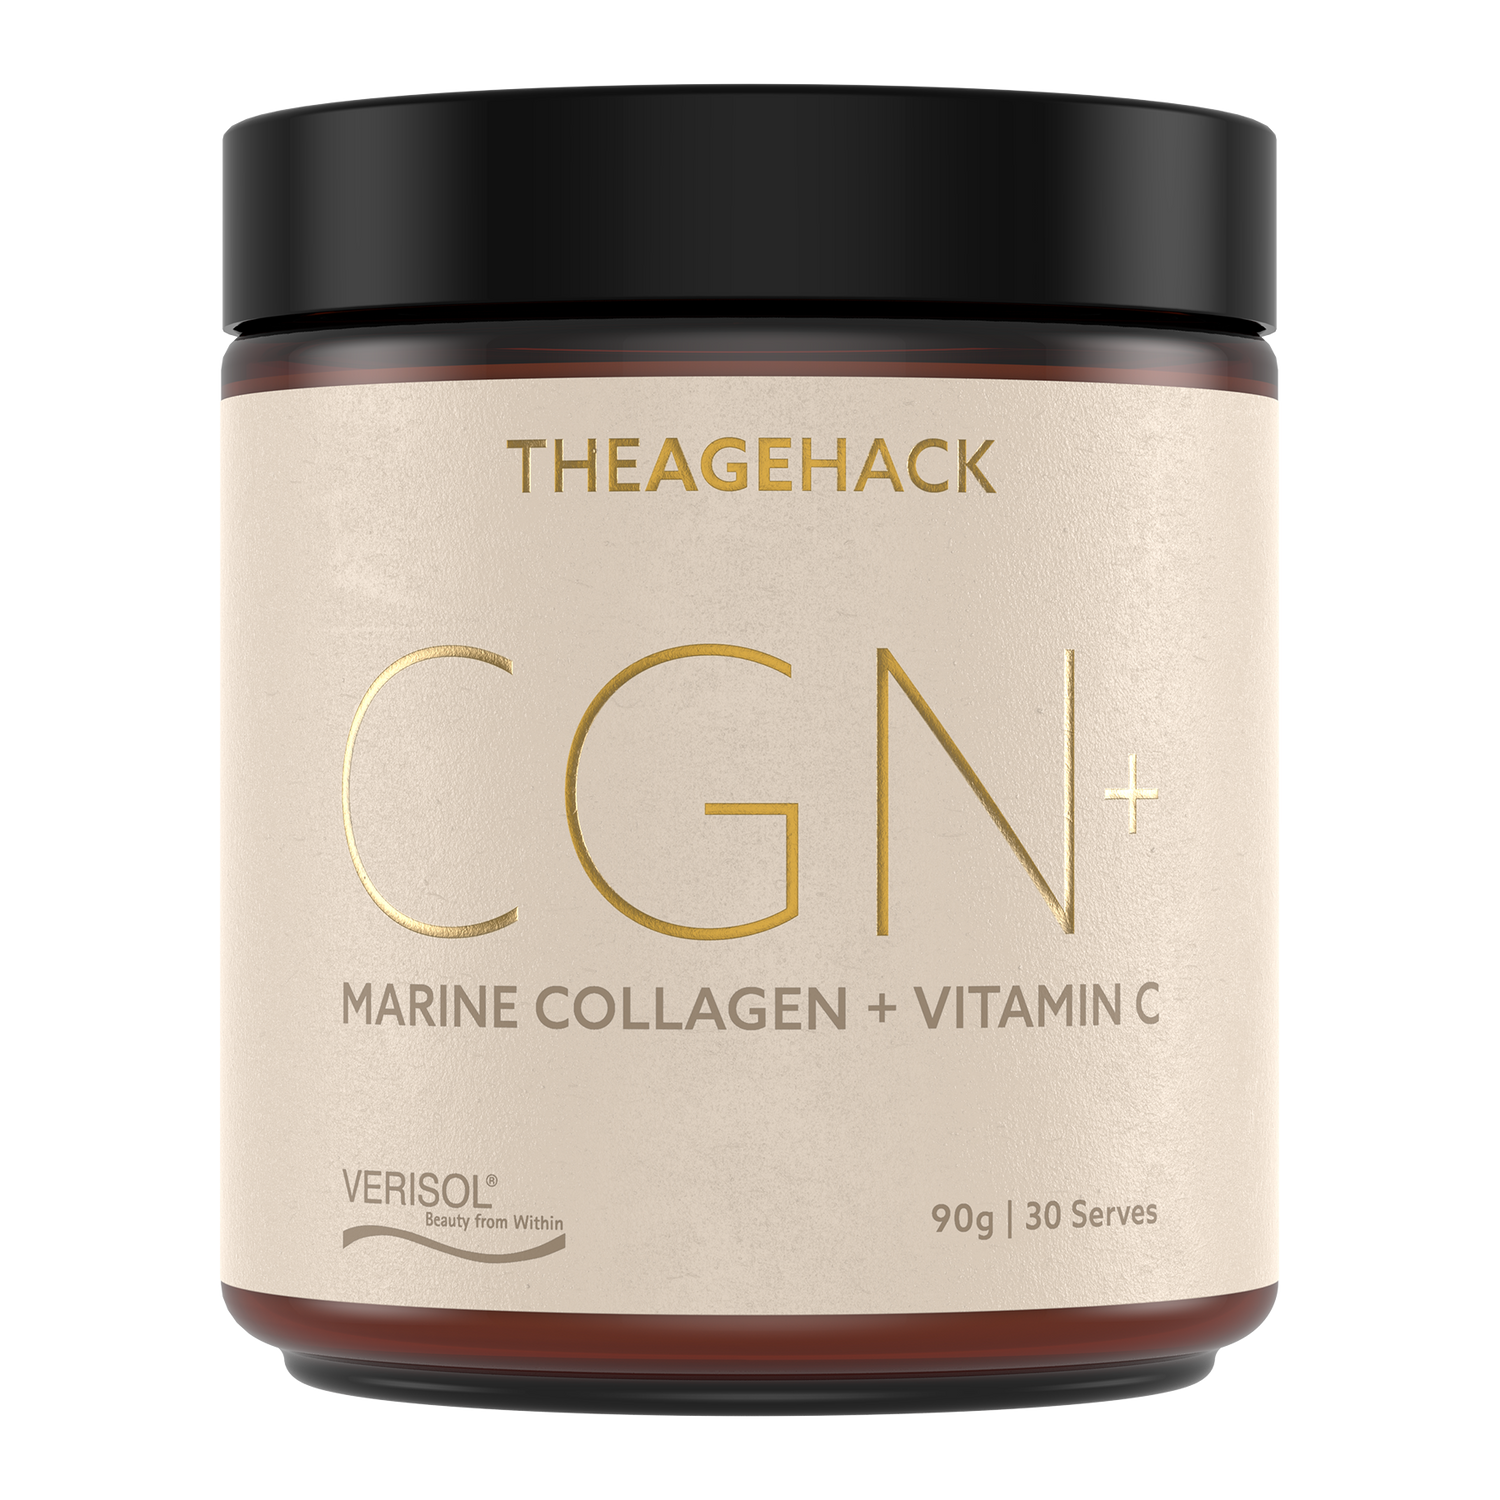 CGN+ Marine Collagen + Vitamin C Product Render